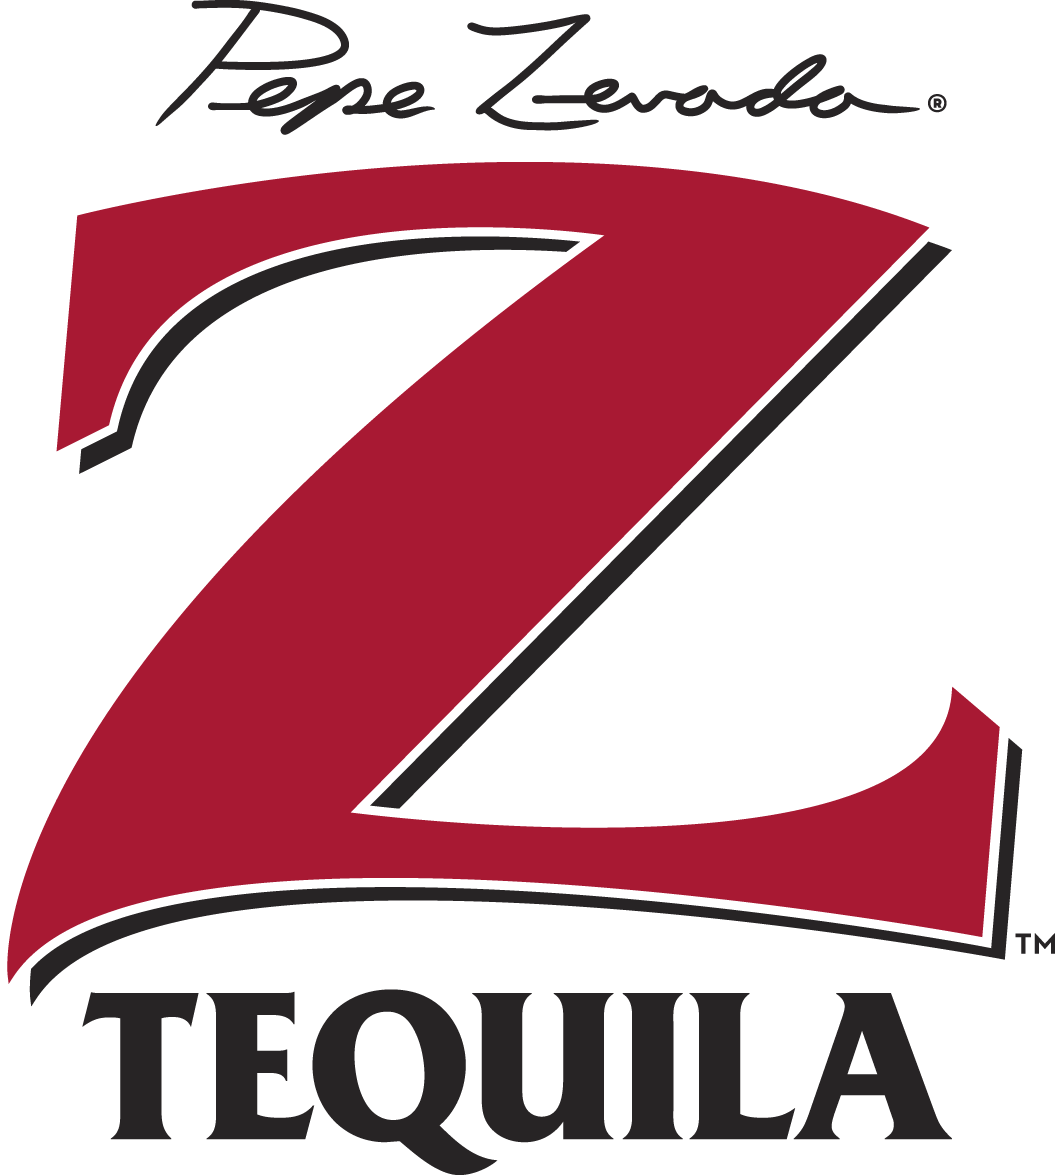 Z_Tequila_logo_CMYK_042512.png